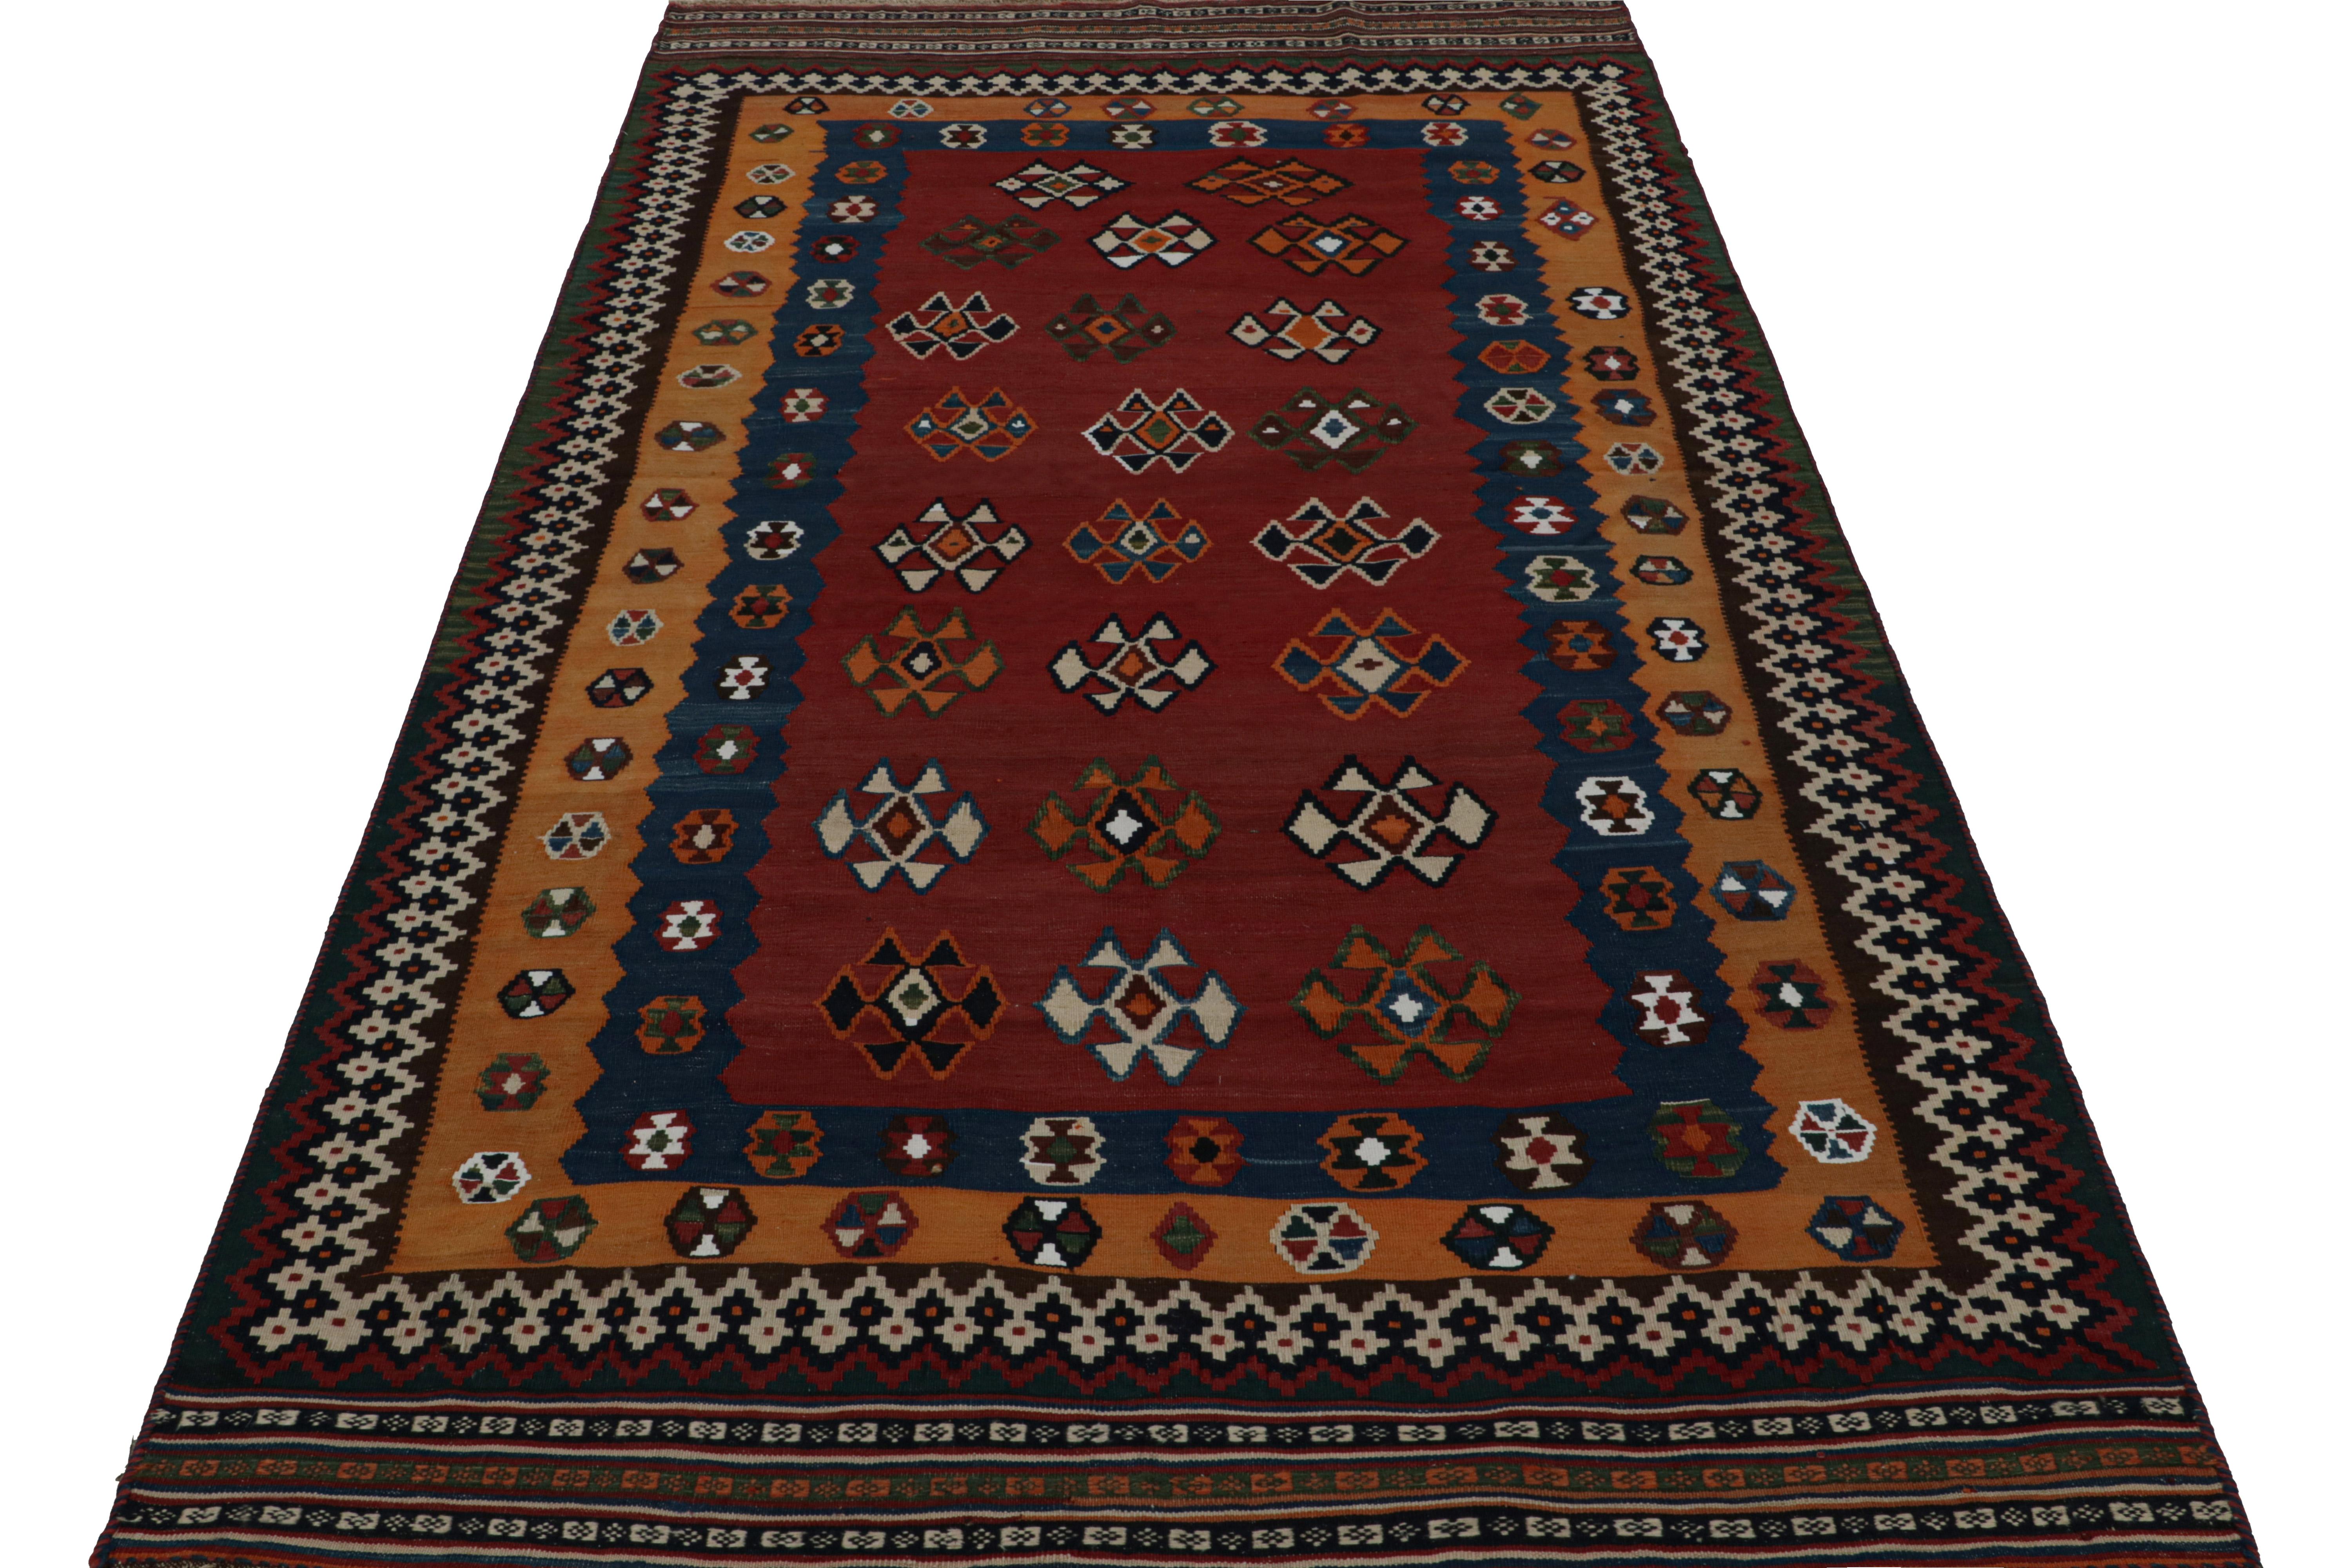 Tribal Vintage Afghani tribal Kilim rug, with Geometric patterns, from Rug & Kilim For Sale